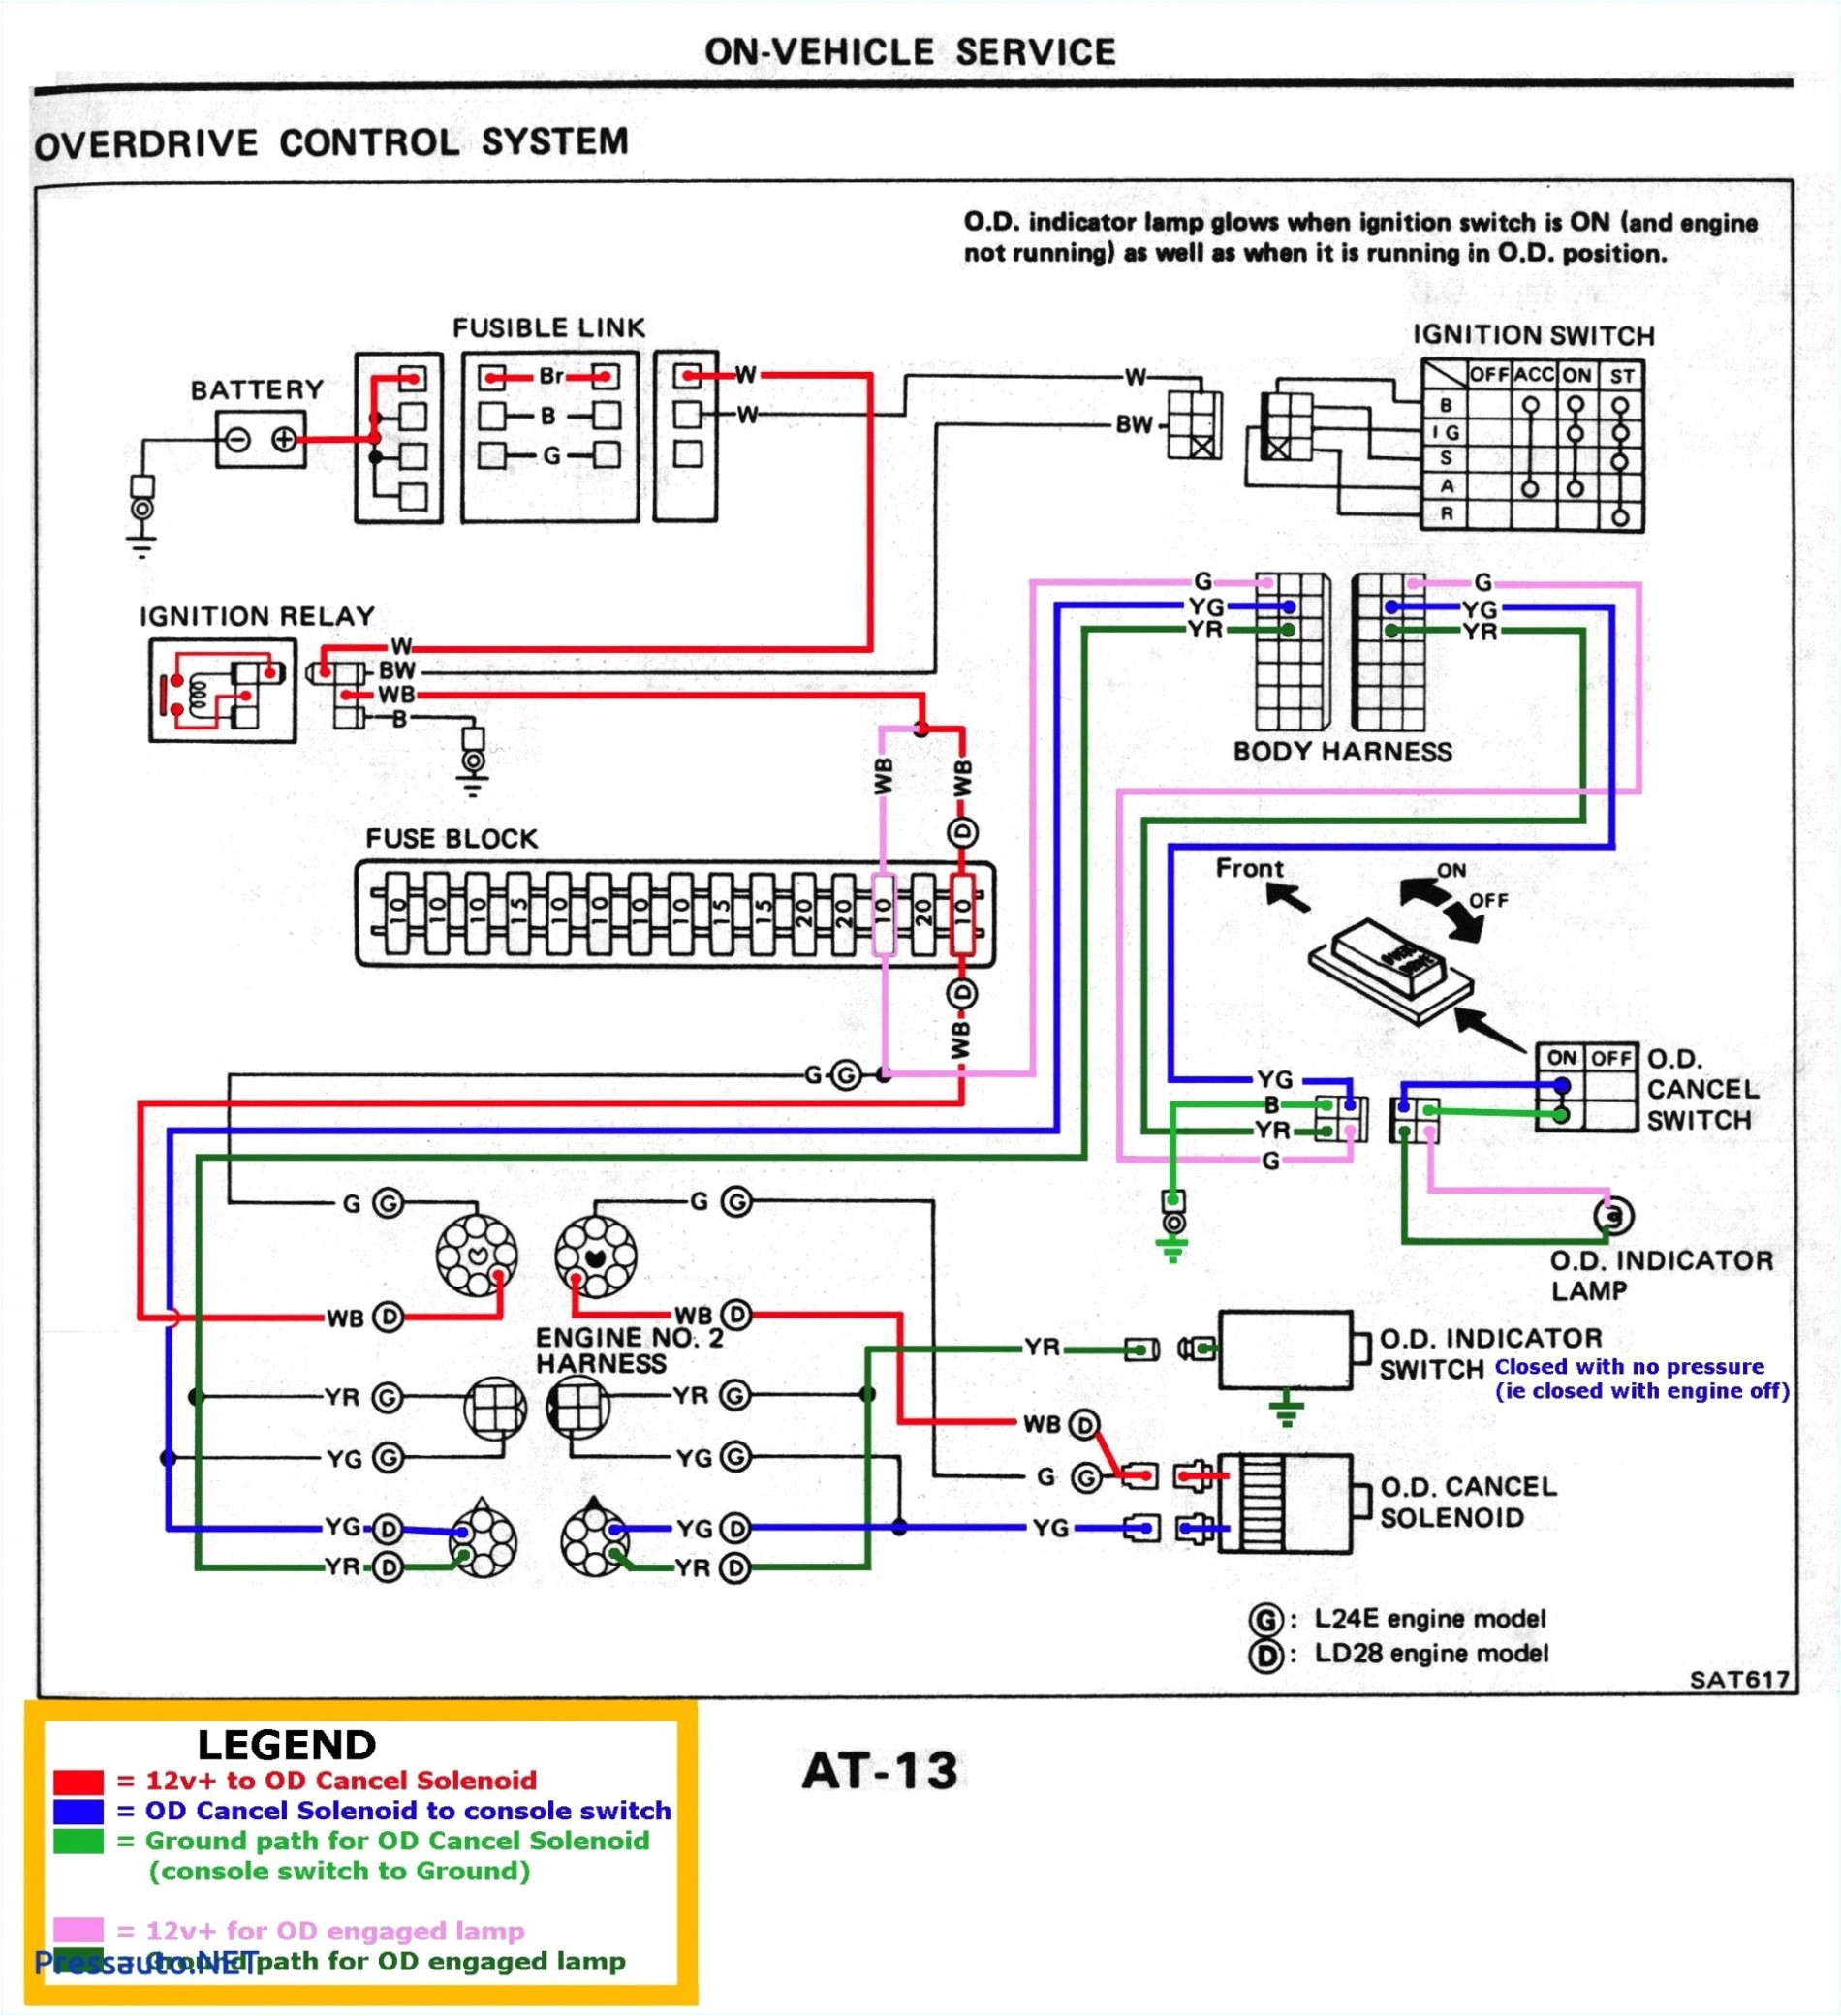 4 prong generator plug wiring diagram wirings diagram4 prong generator plug wiring diagram fresh 7 prong